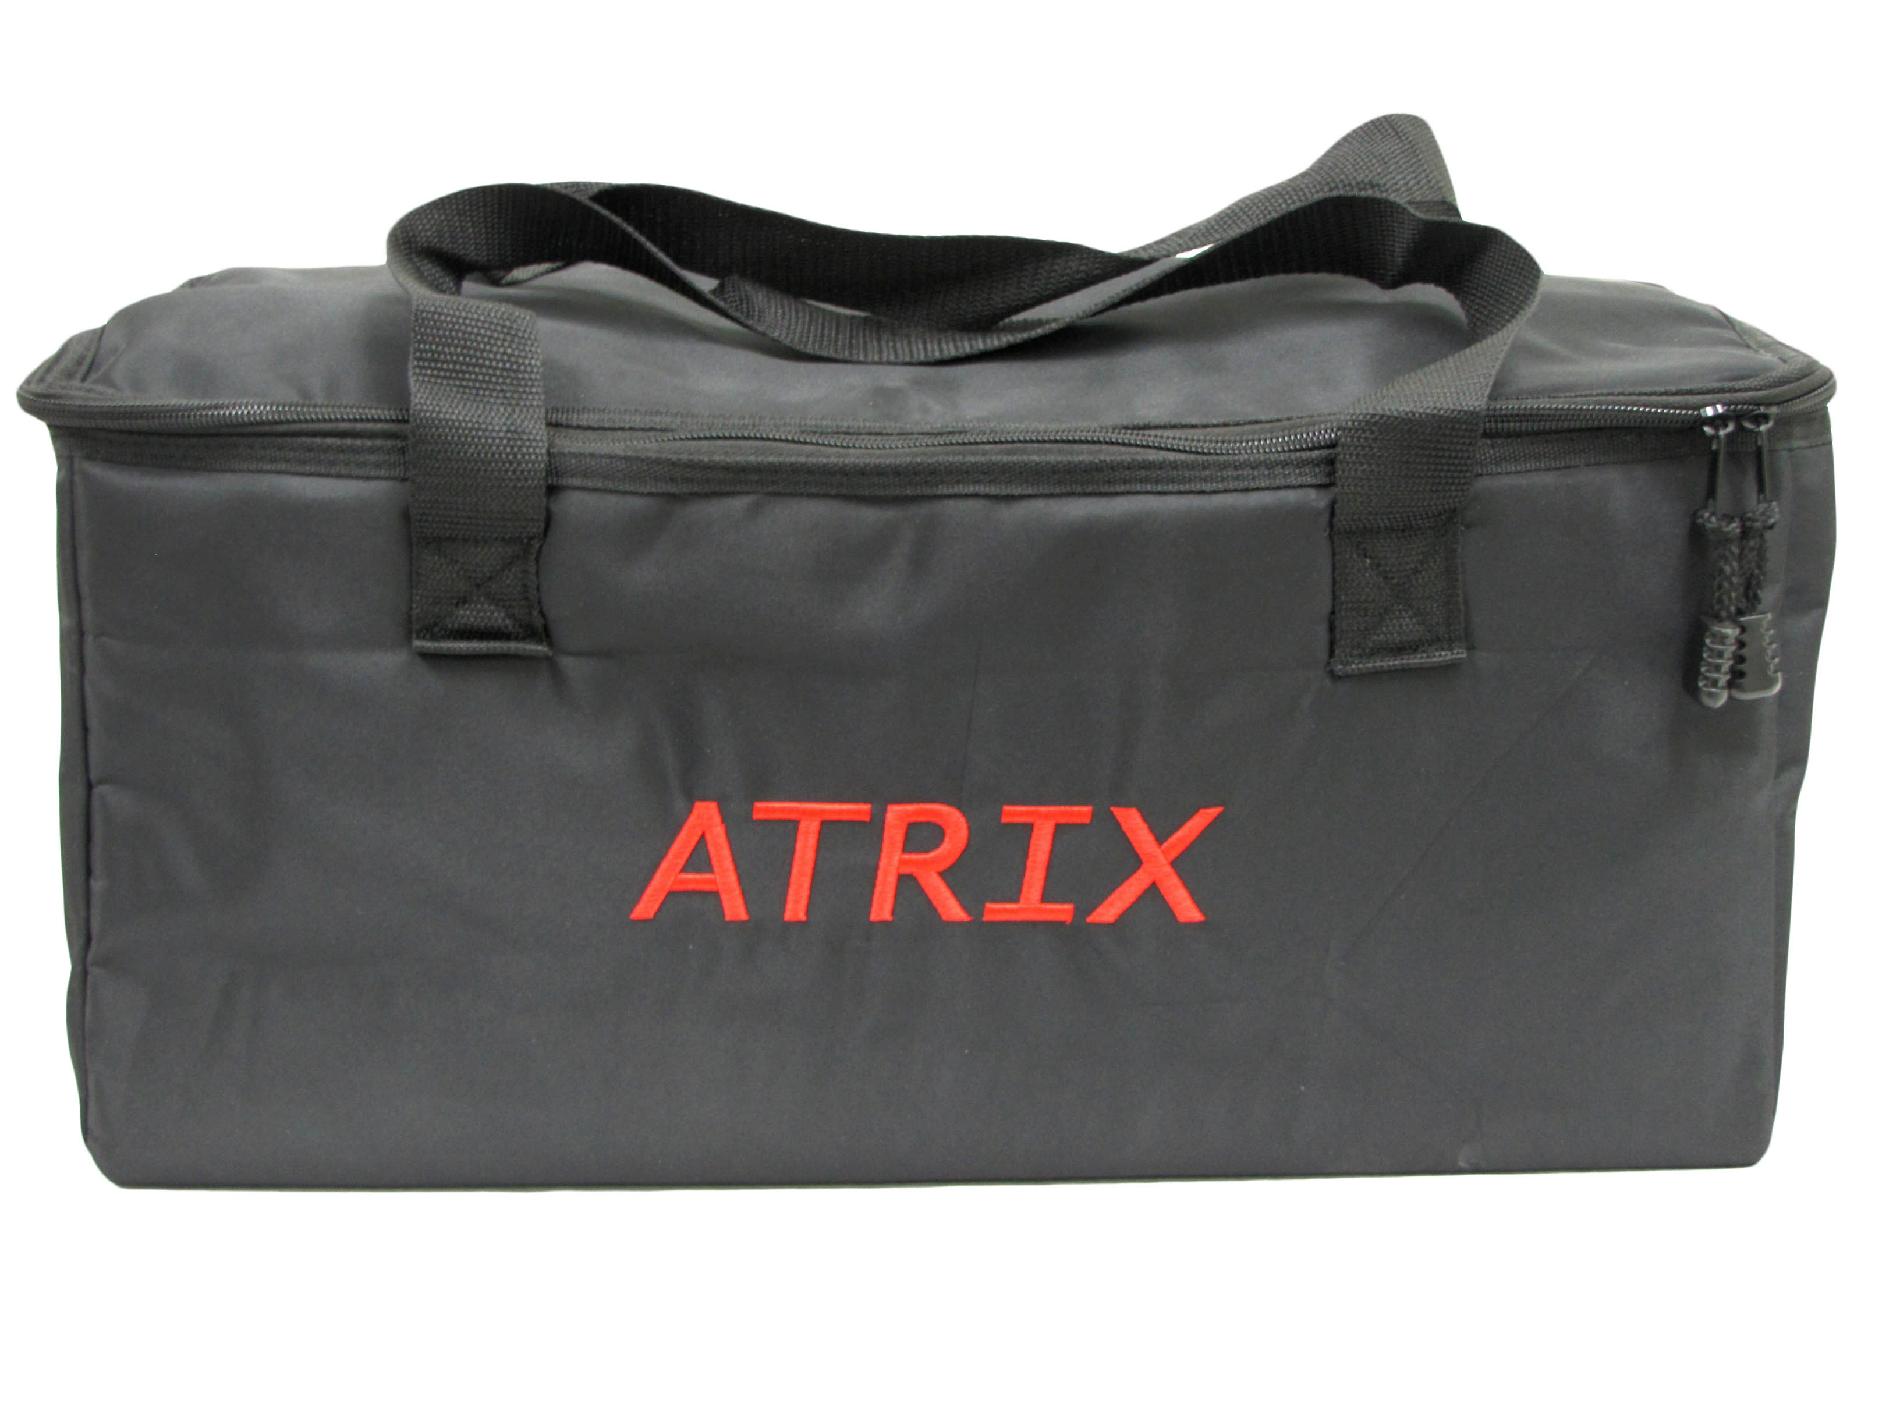 Atrix New Deluxe Carry / Storage Bag